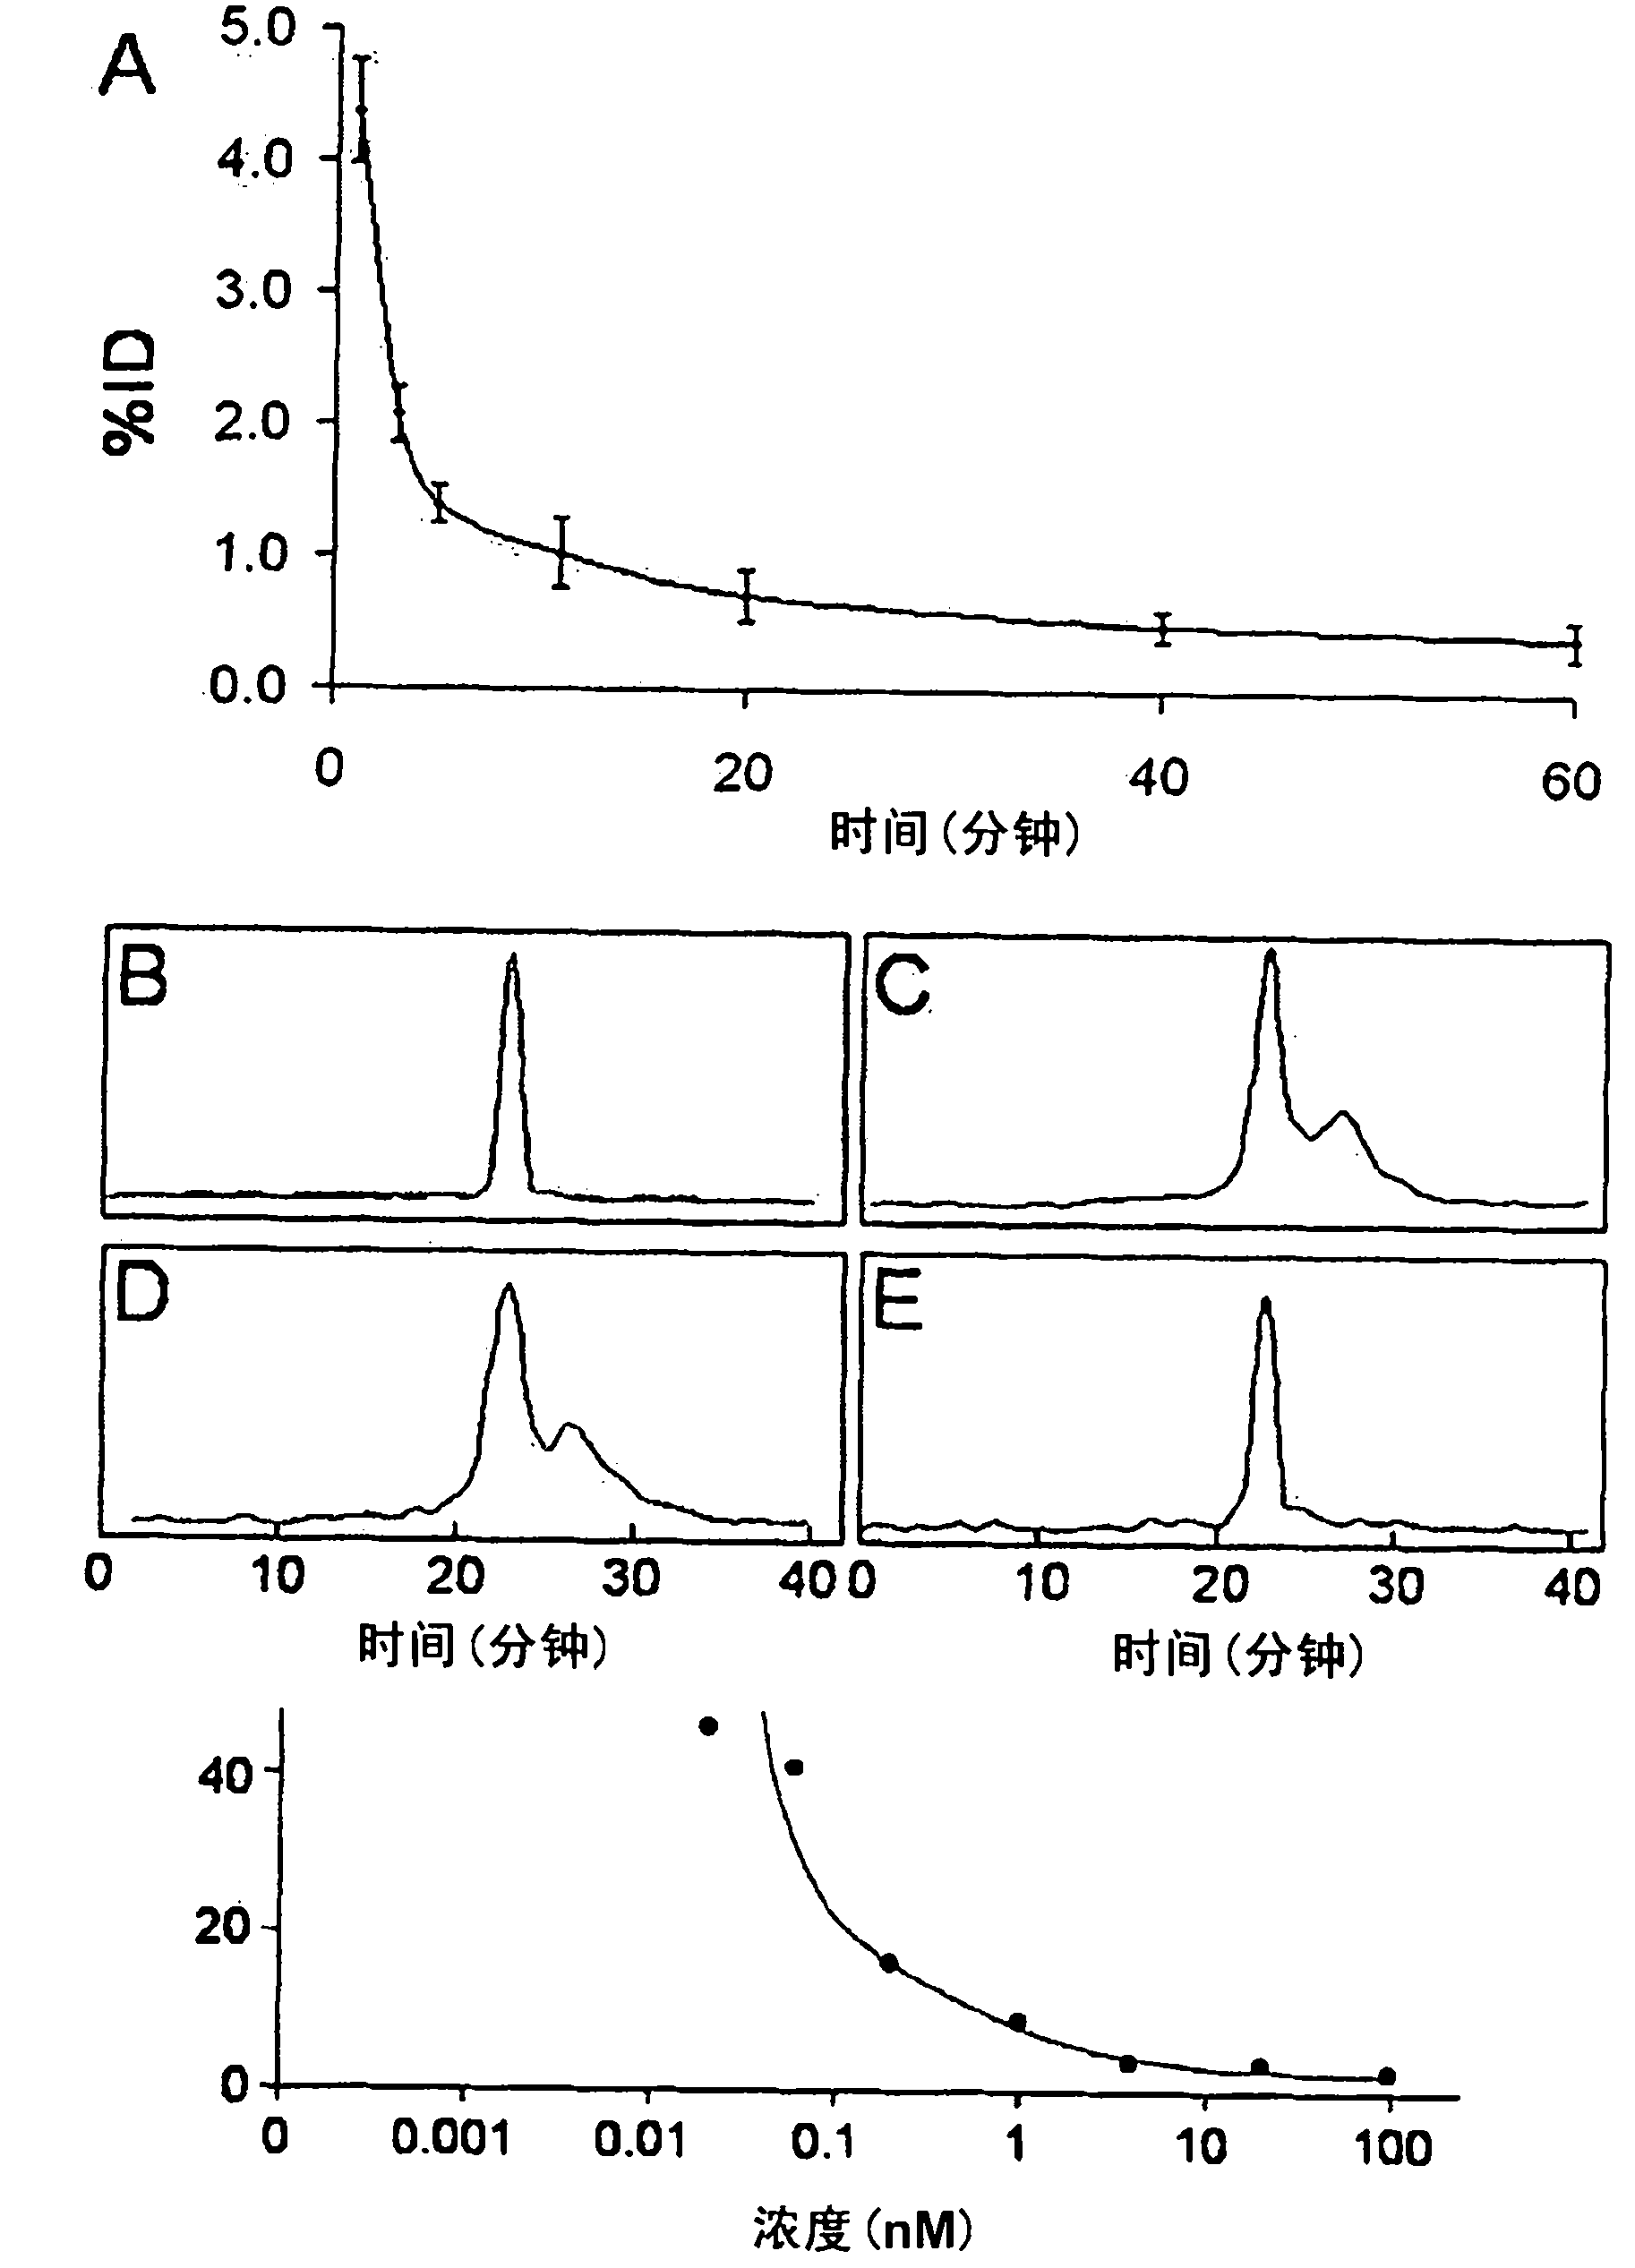 99mTc-labeled 19 amino acid containing peptide for use as phosphatidylethanolamine binding molecular probe and radiopharmaceutical